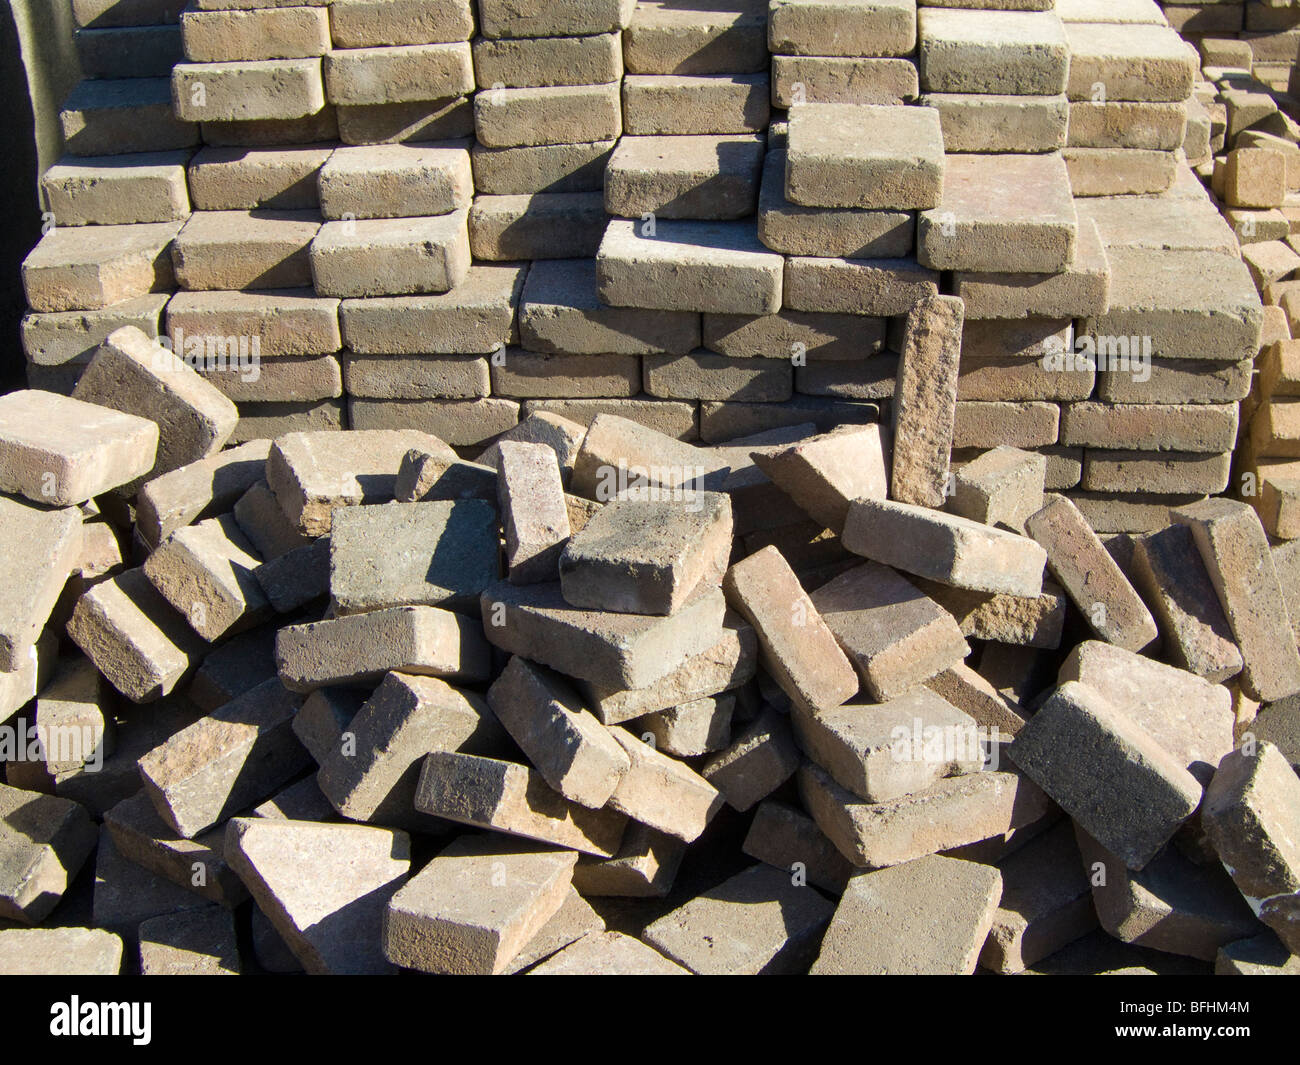 A pile of paving bricks Stock Photo